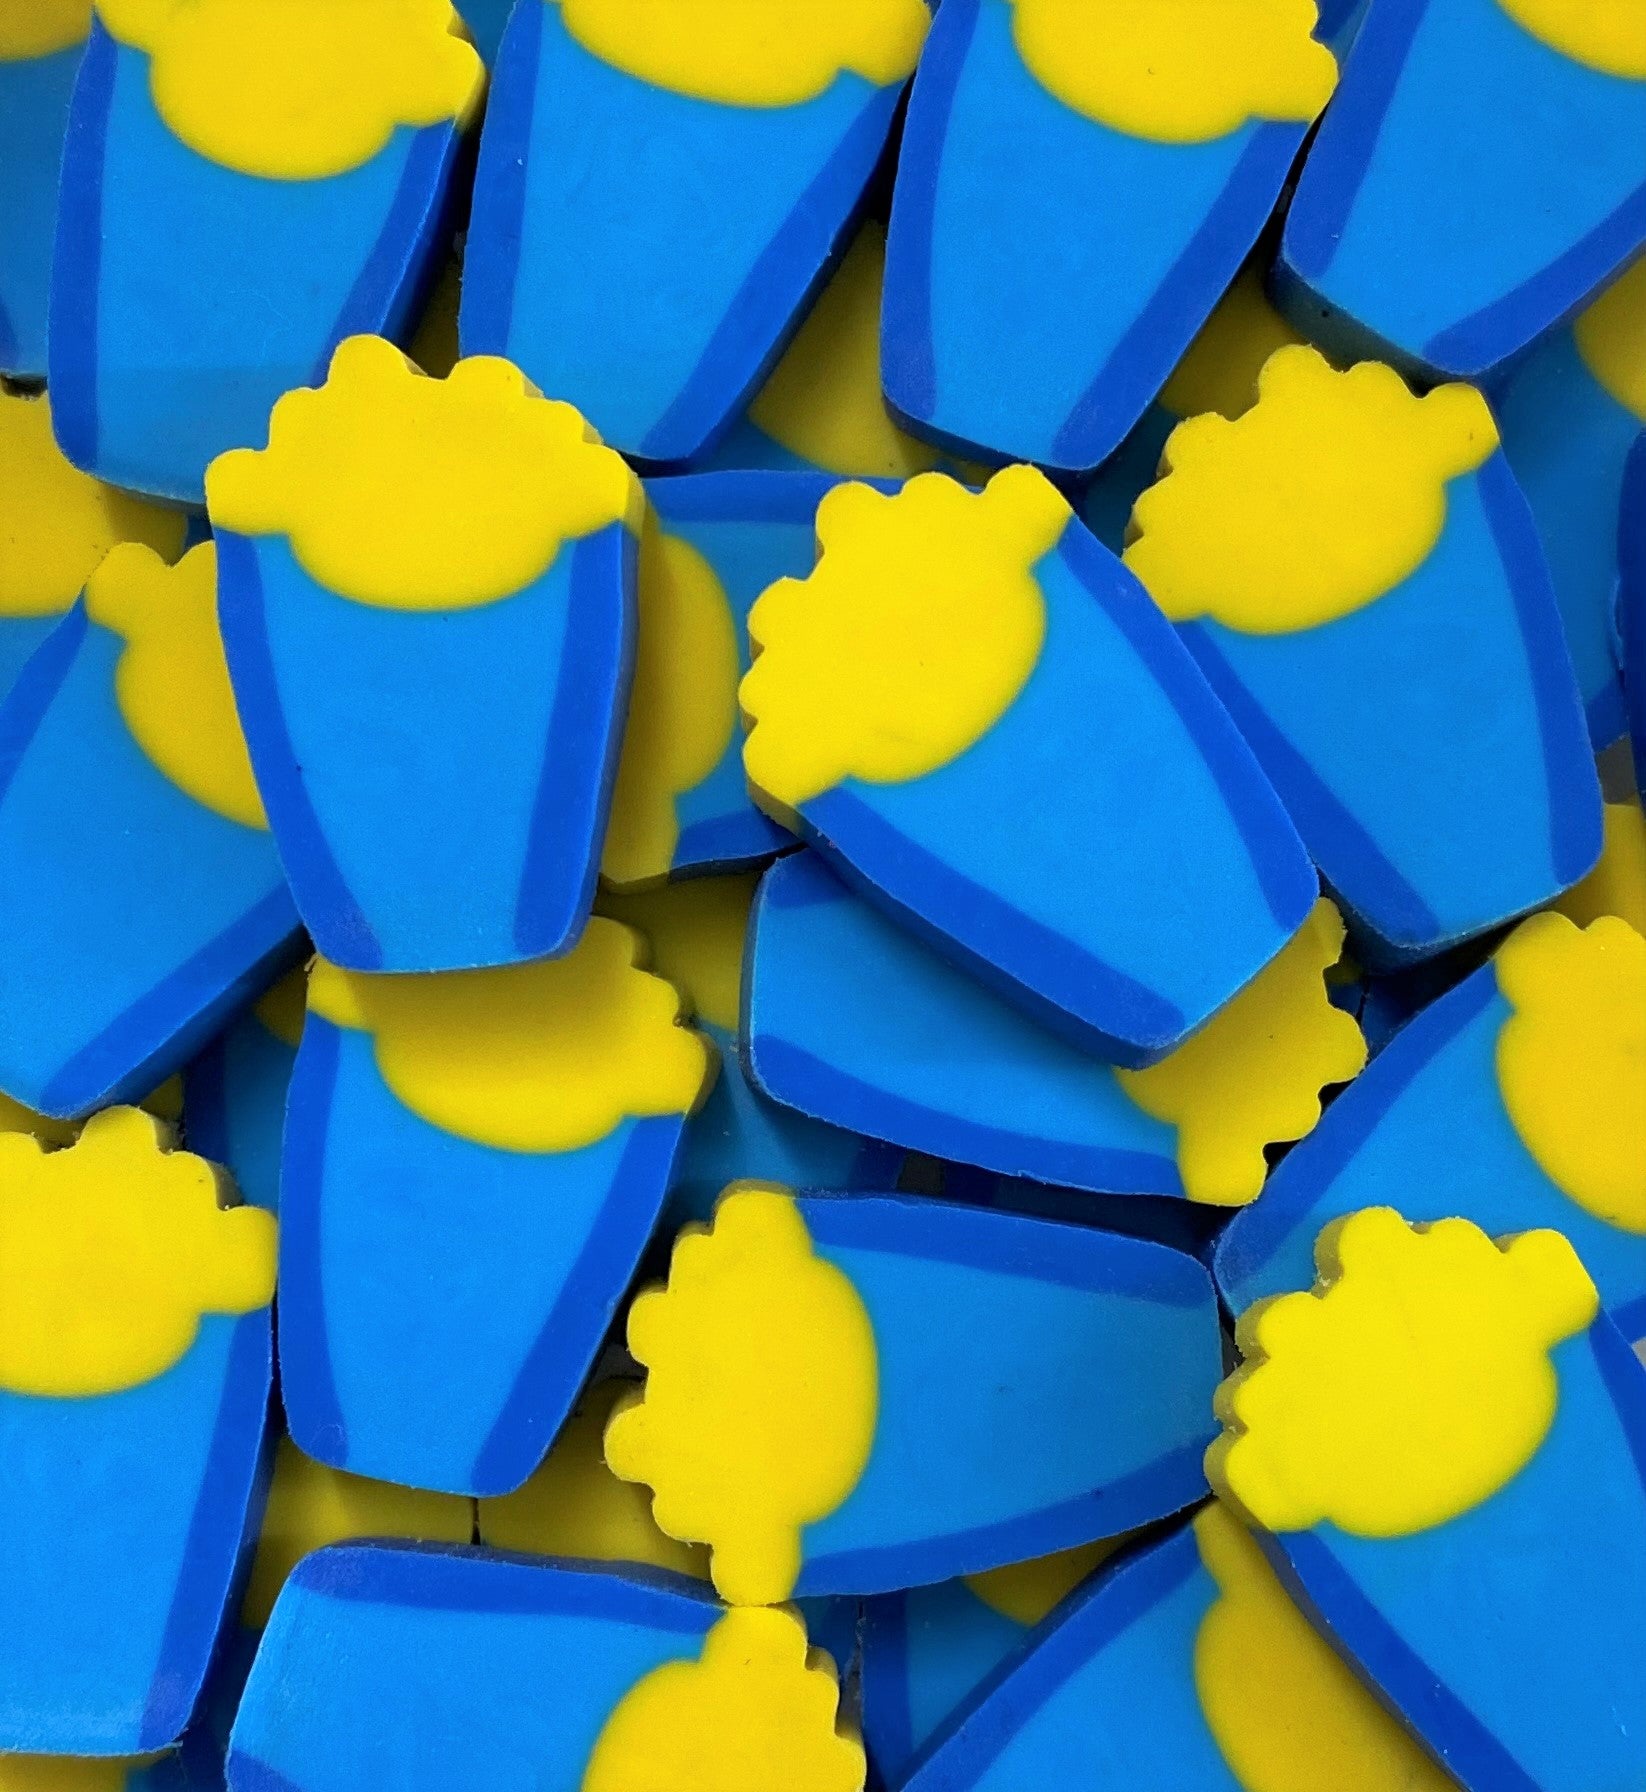 popcorn shaped erasers